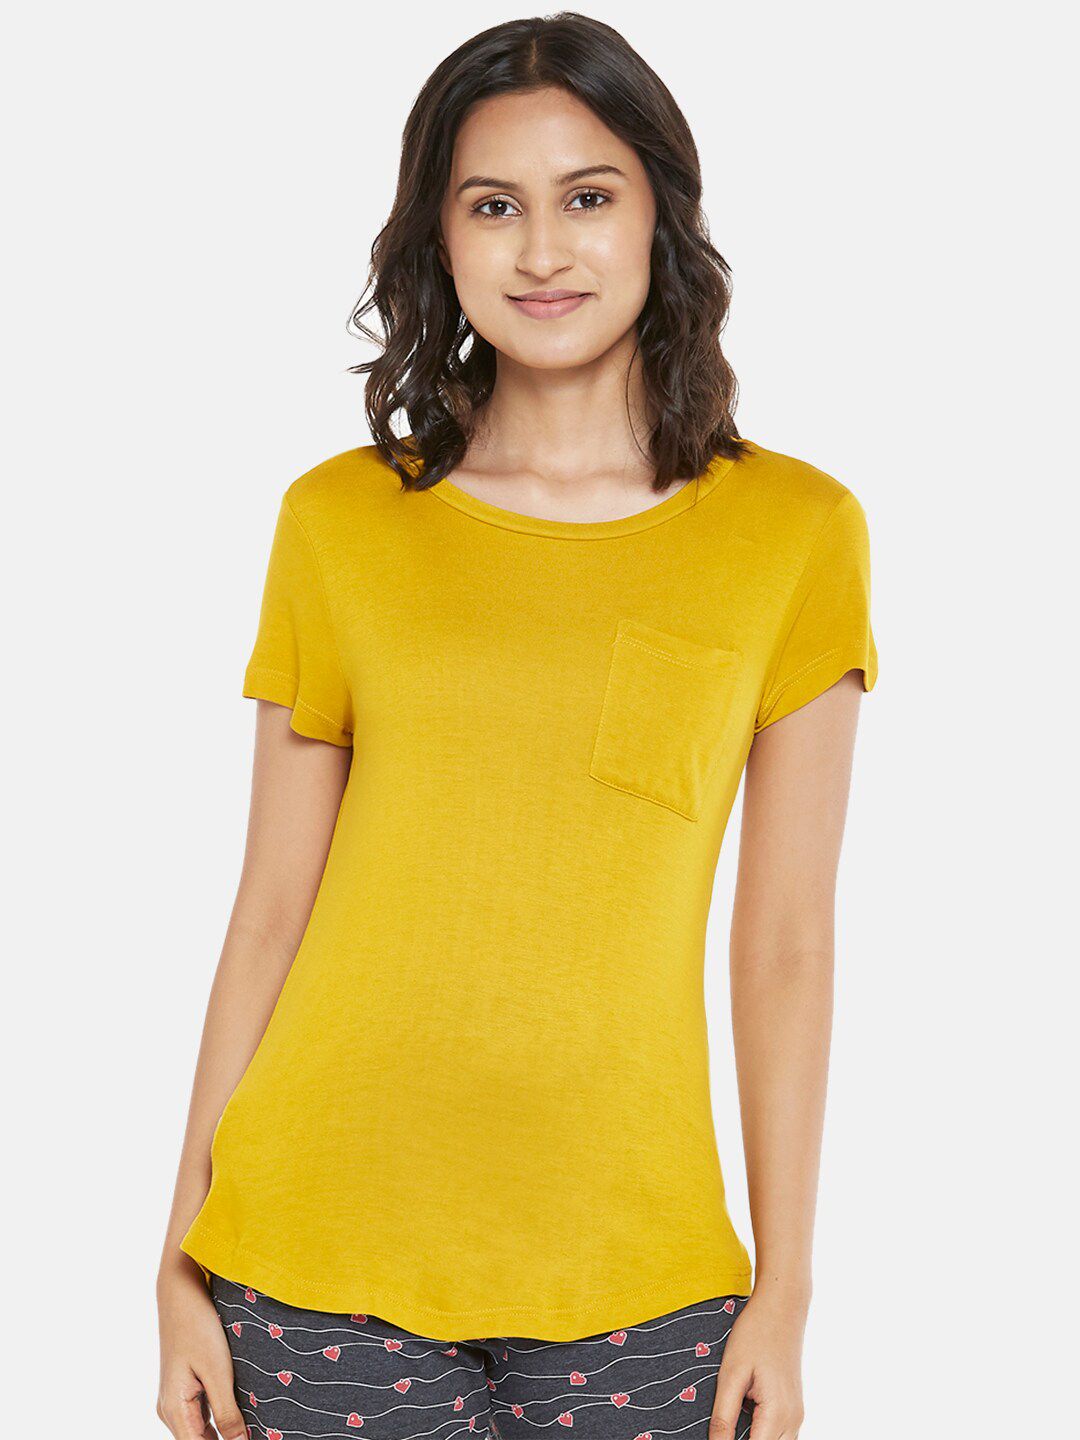 Dreamz by Pantaloons Women Mustard Yellow Lounge T-shirt Price in India